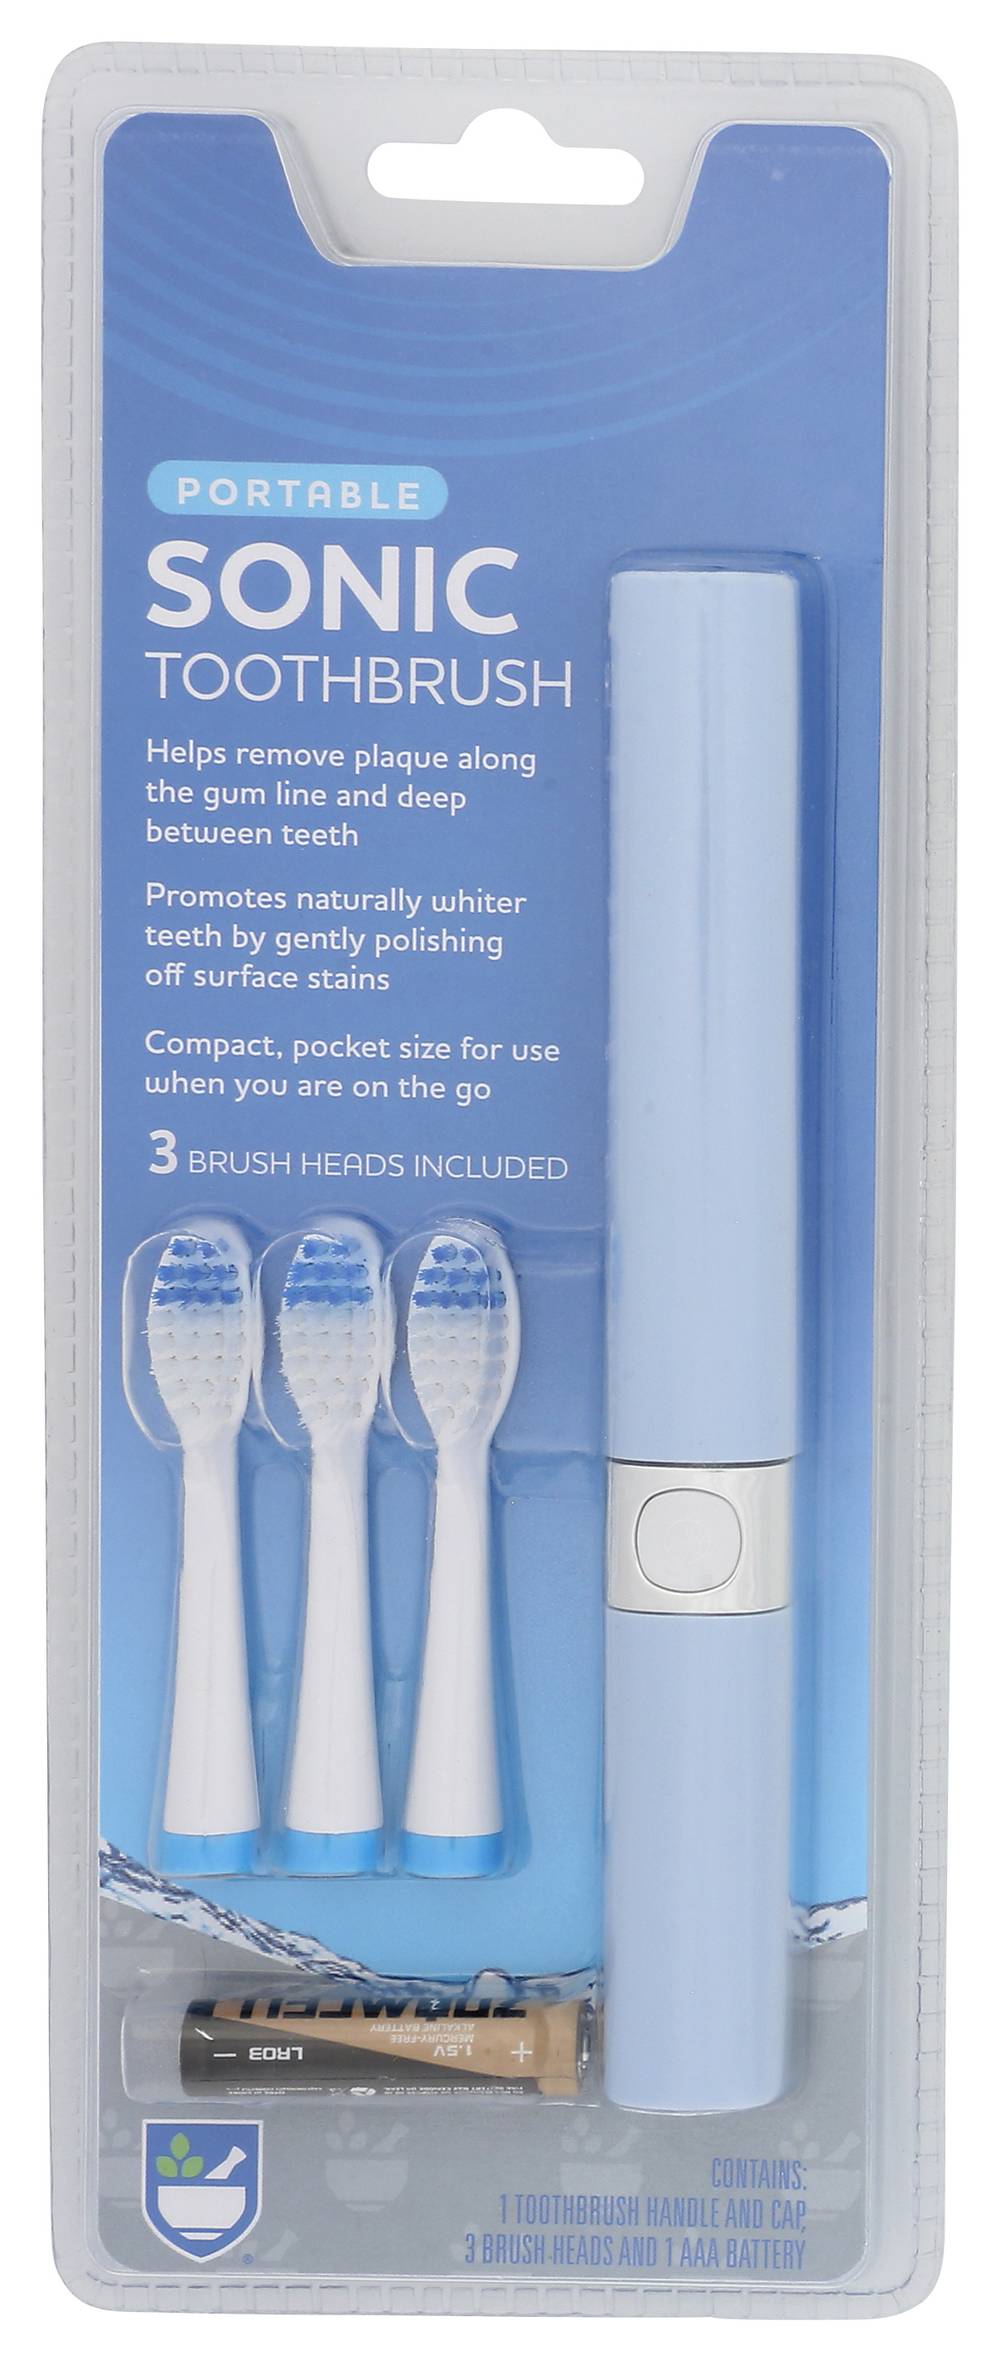 Rite Aid Portable Sonic Toothbrush Kit